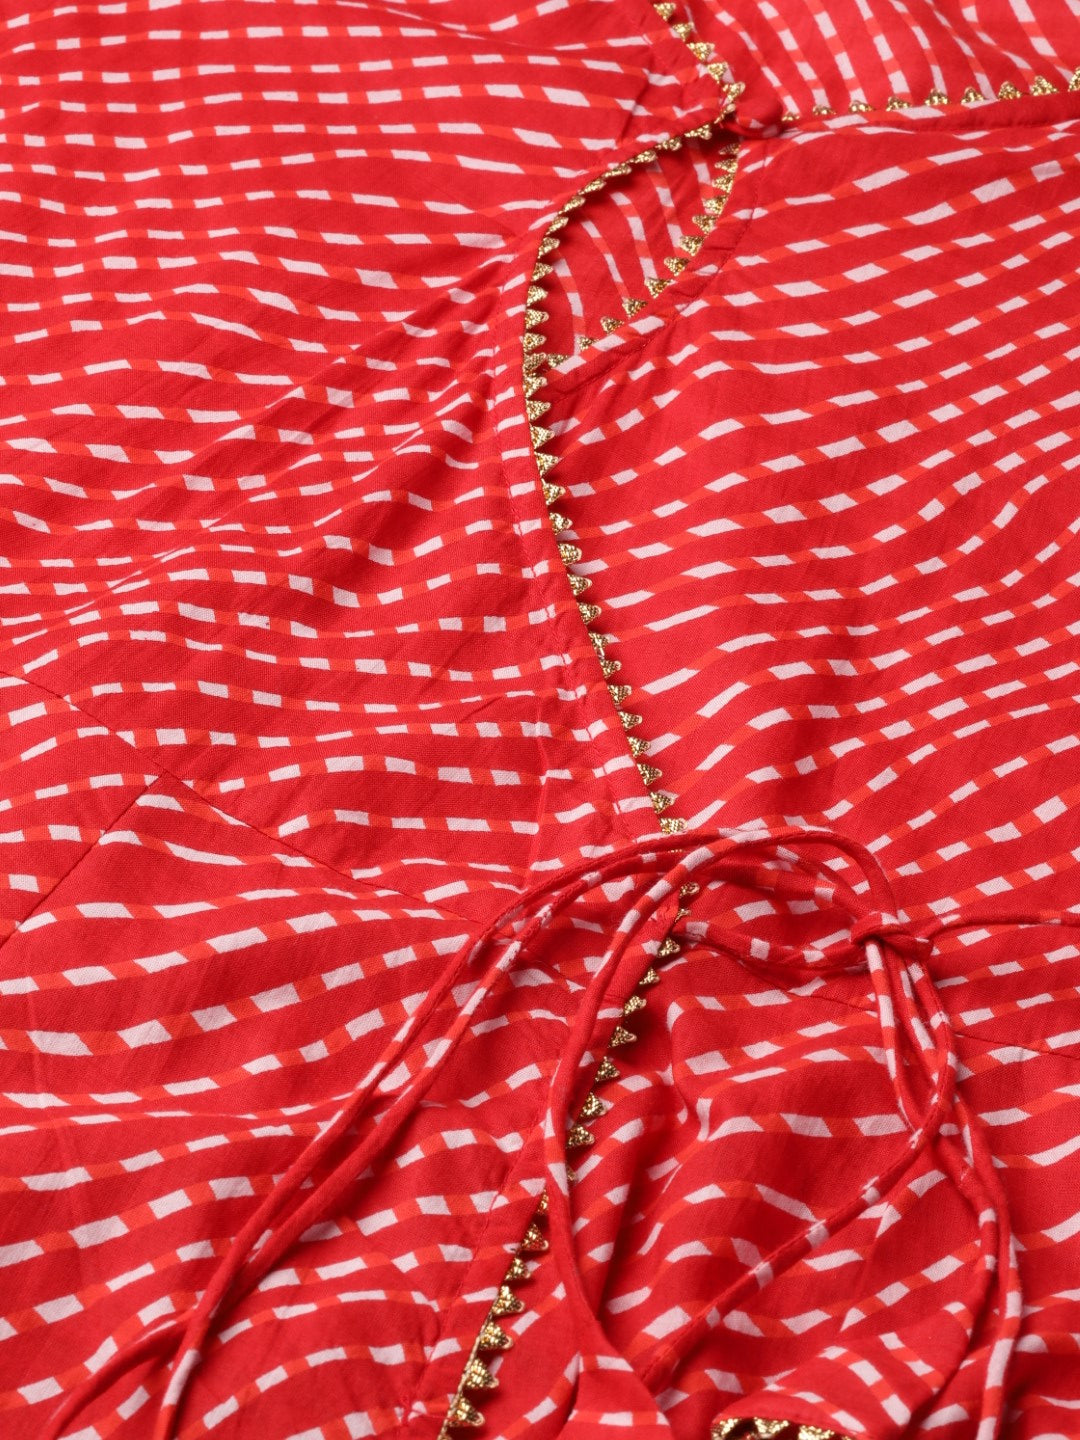 Women's Red And White Printed Kurta With Palazzos - Bhama Couture